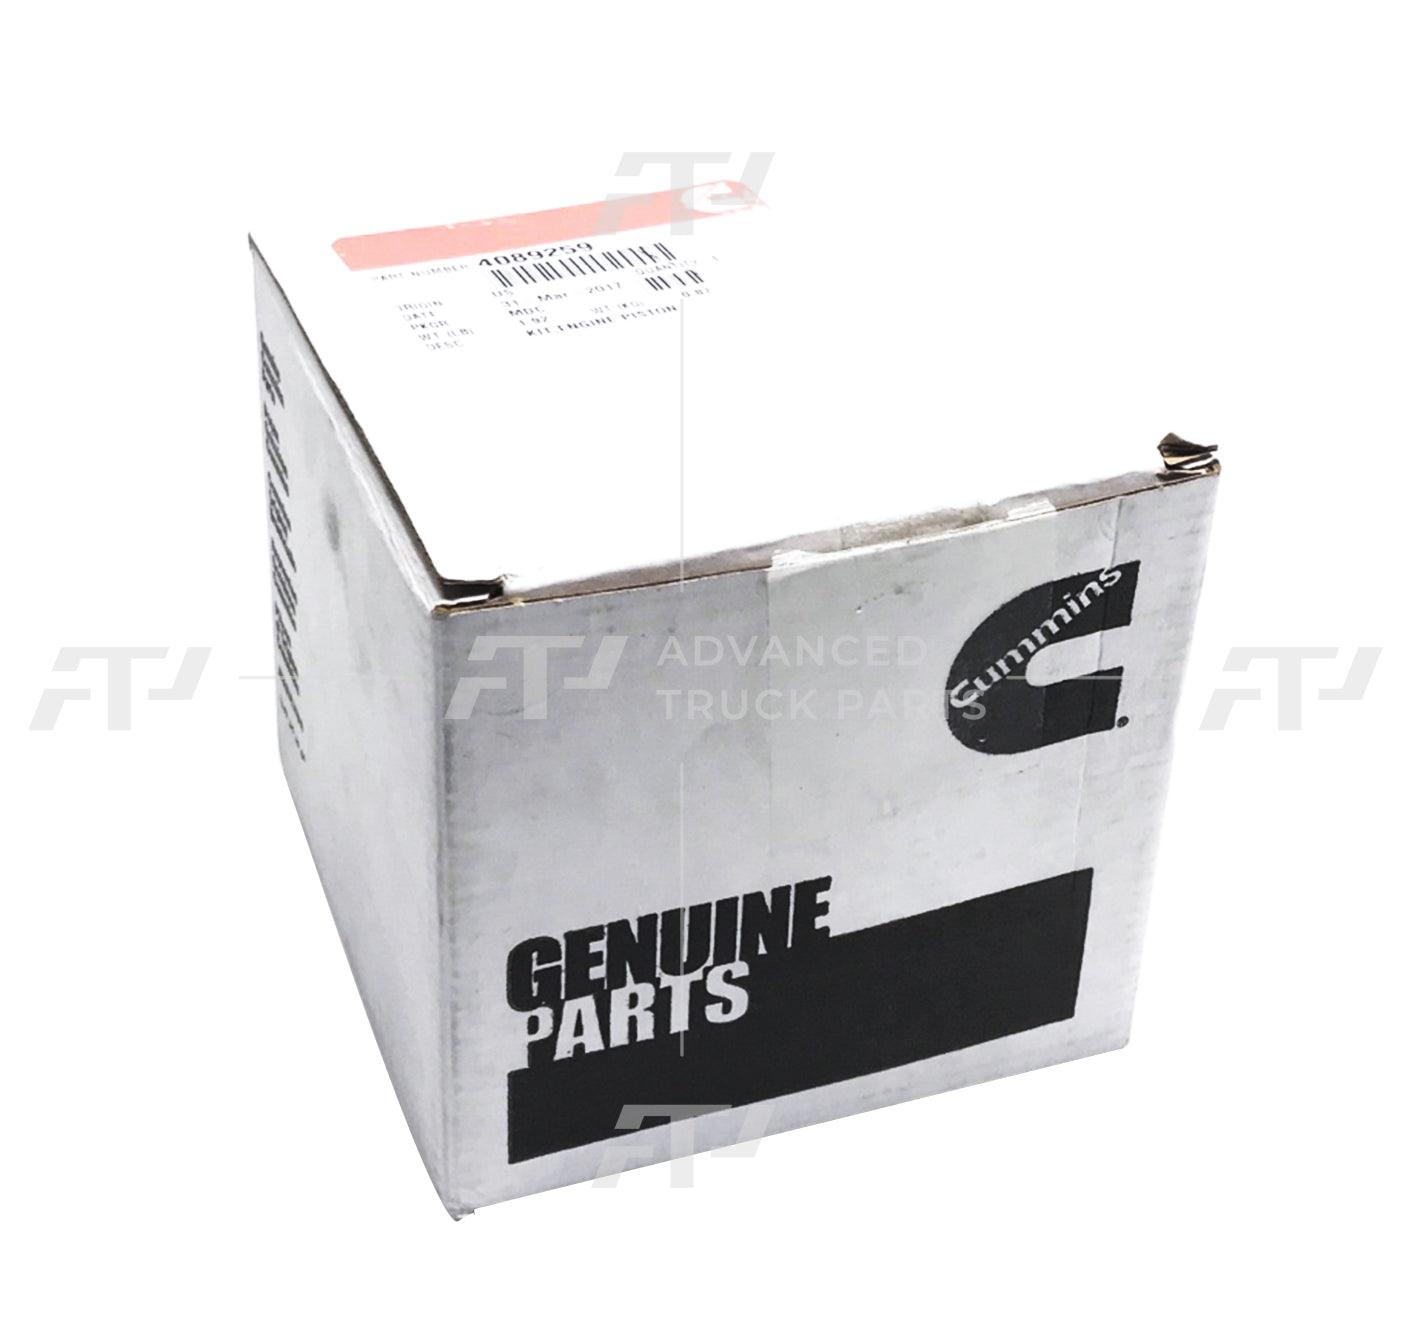 4089259 Genuine Cummins® Engine Piston Kit - ADVANCED TRUCK PARTS